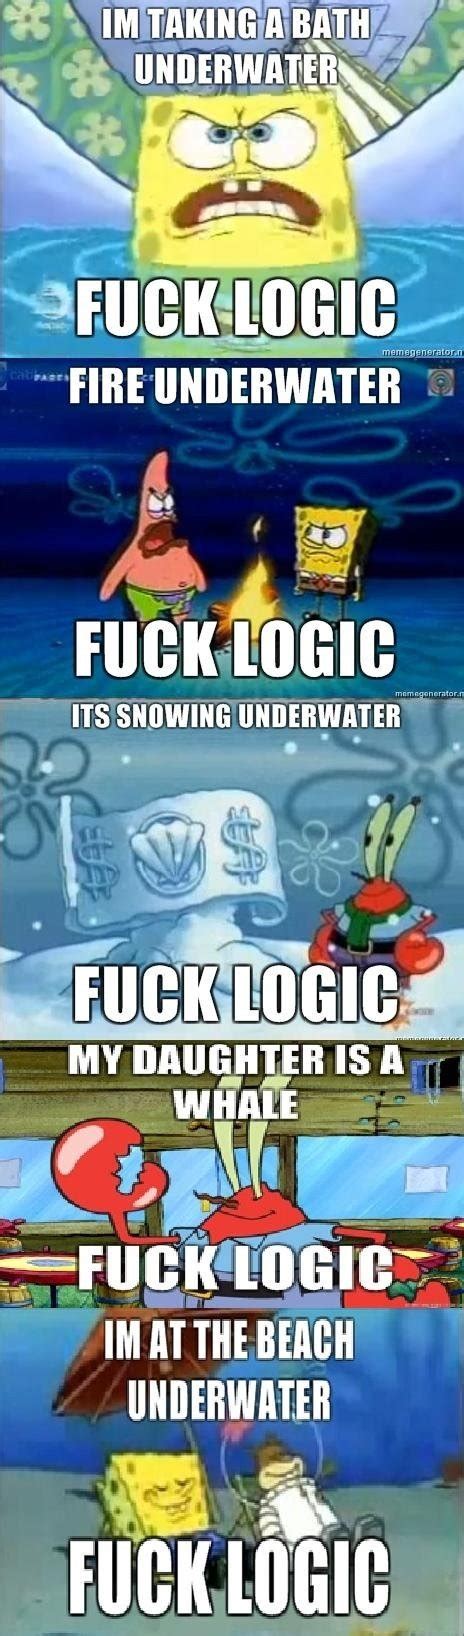 Image Fuck Logic Know Your Meme